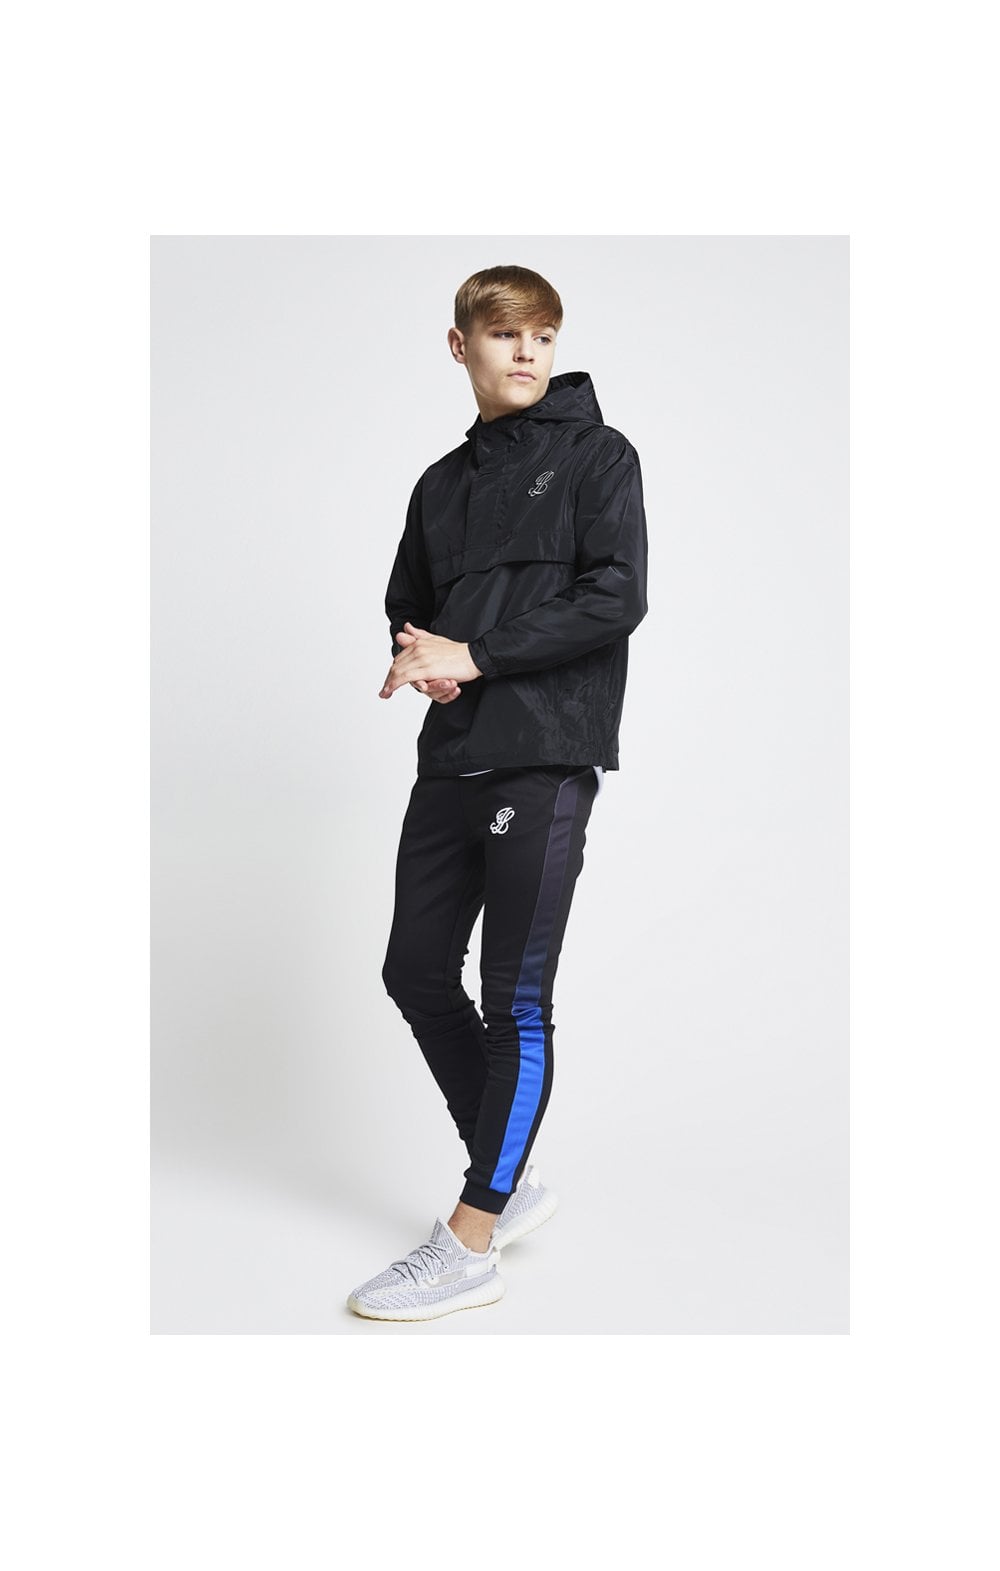 Illusive London Lightweight 1/4 Zip Jacket – Black (4)